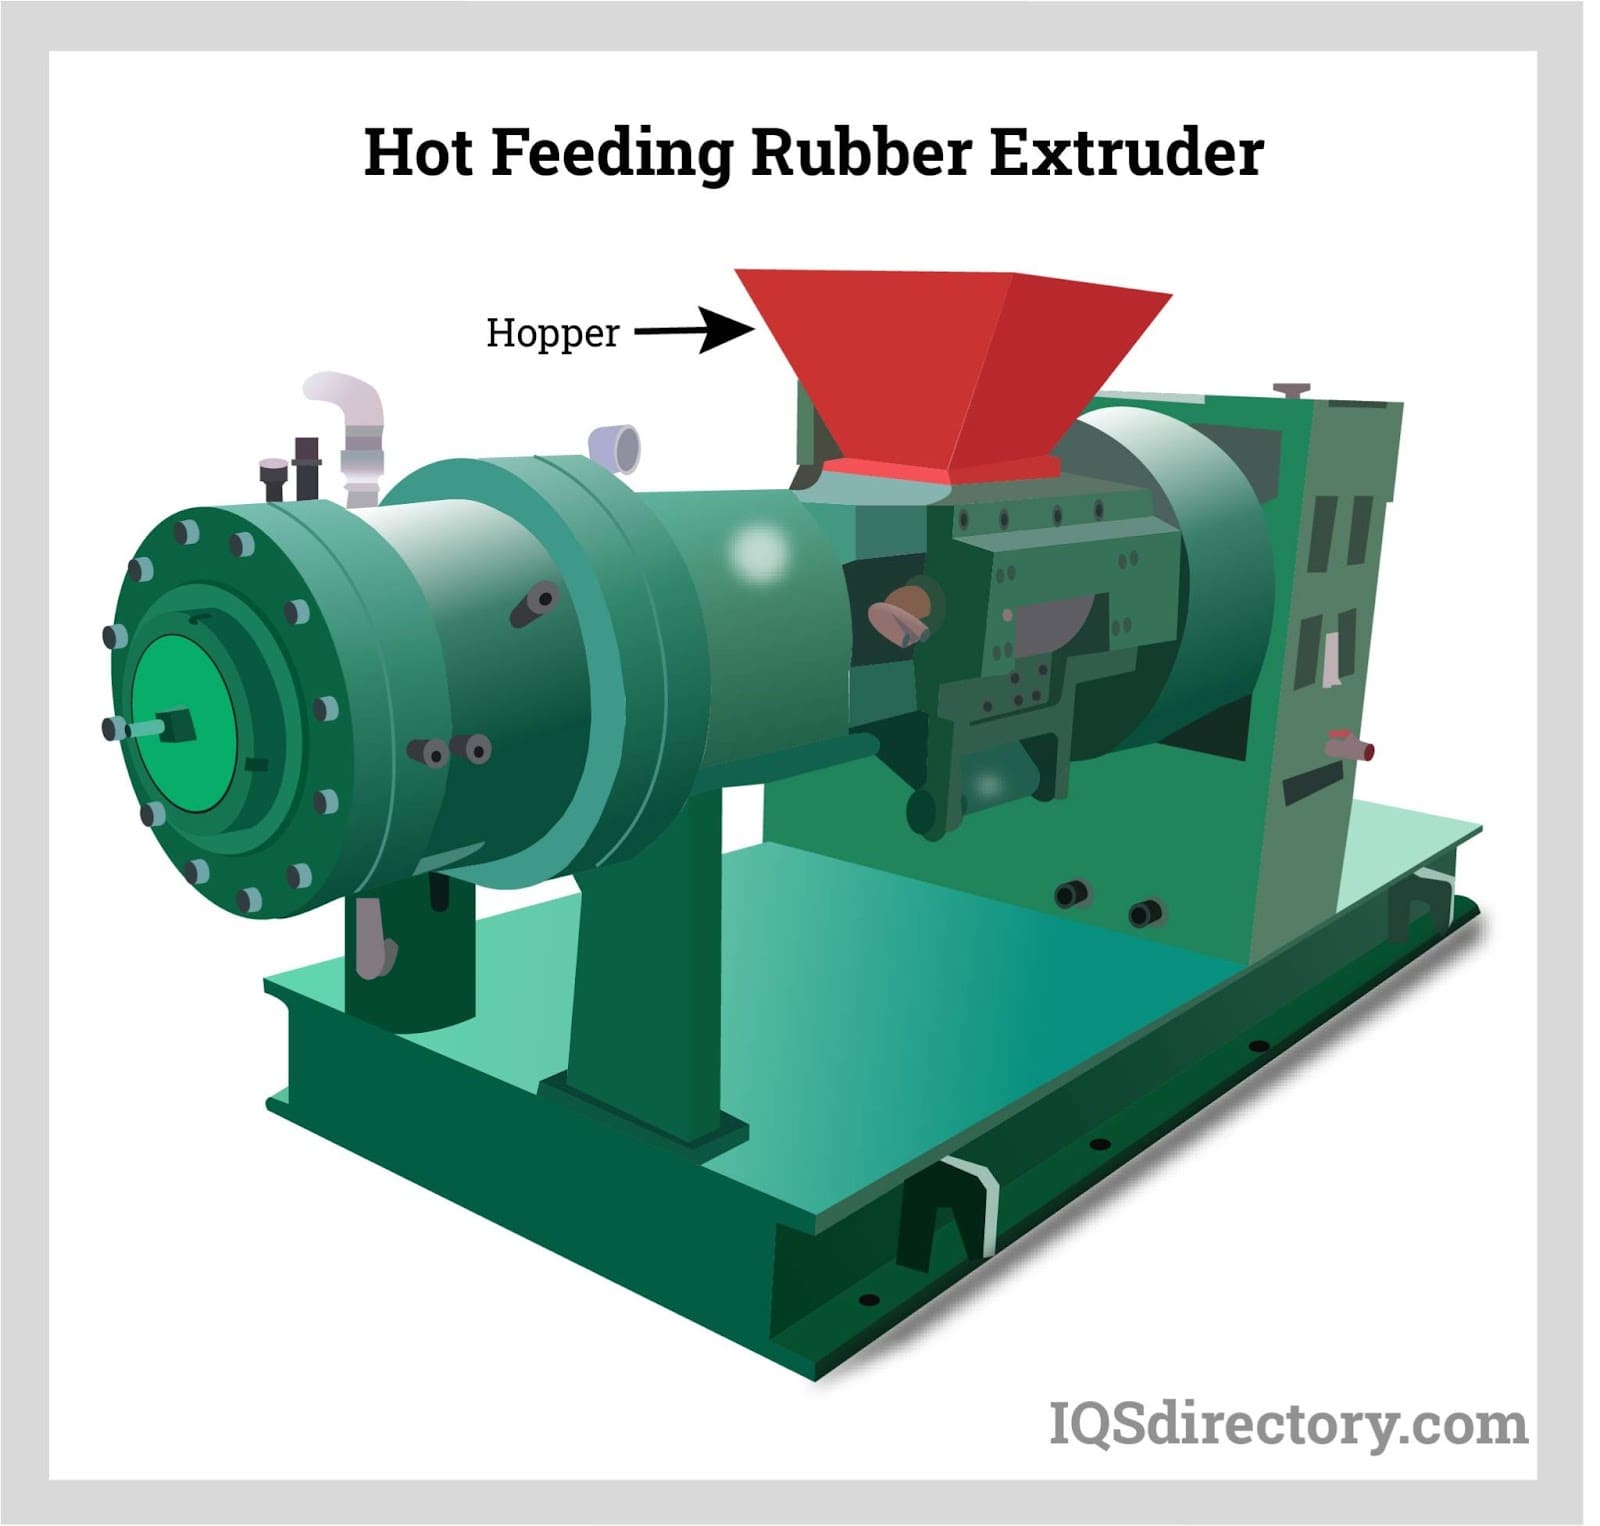 Hot Feeding Rubber Extruder